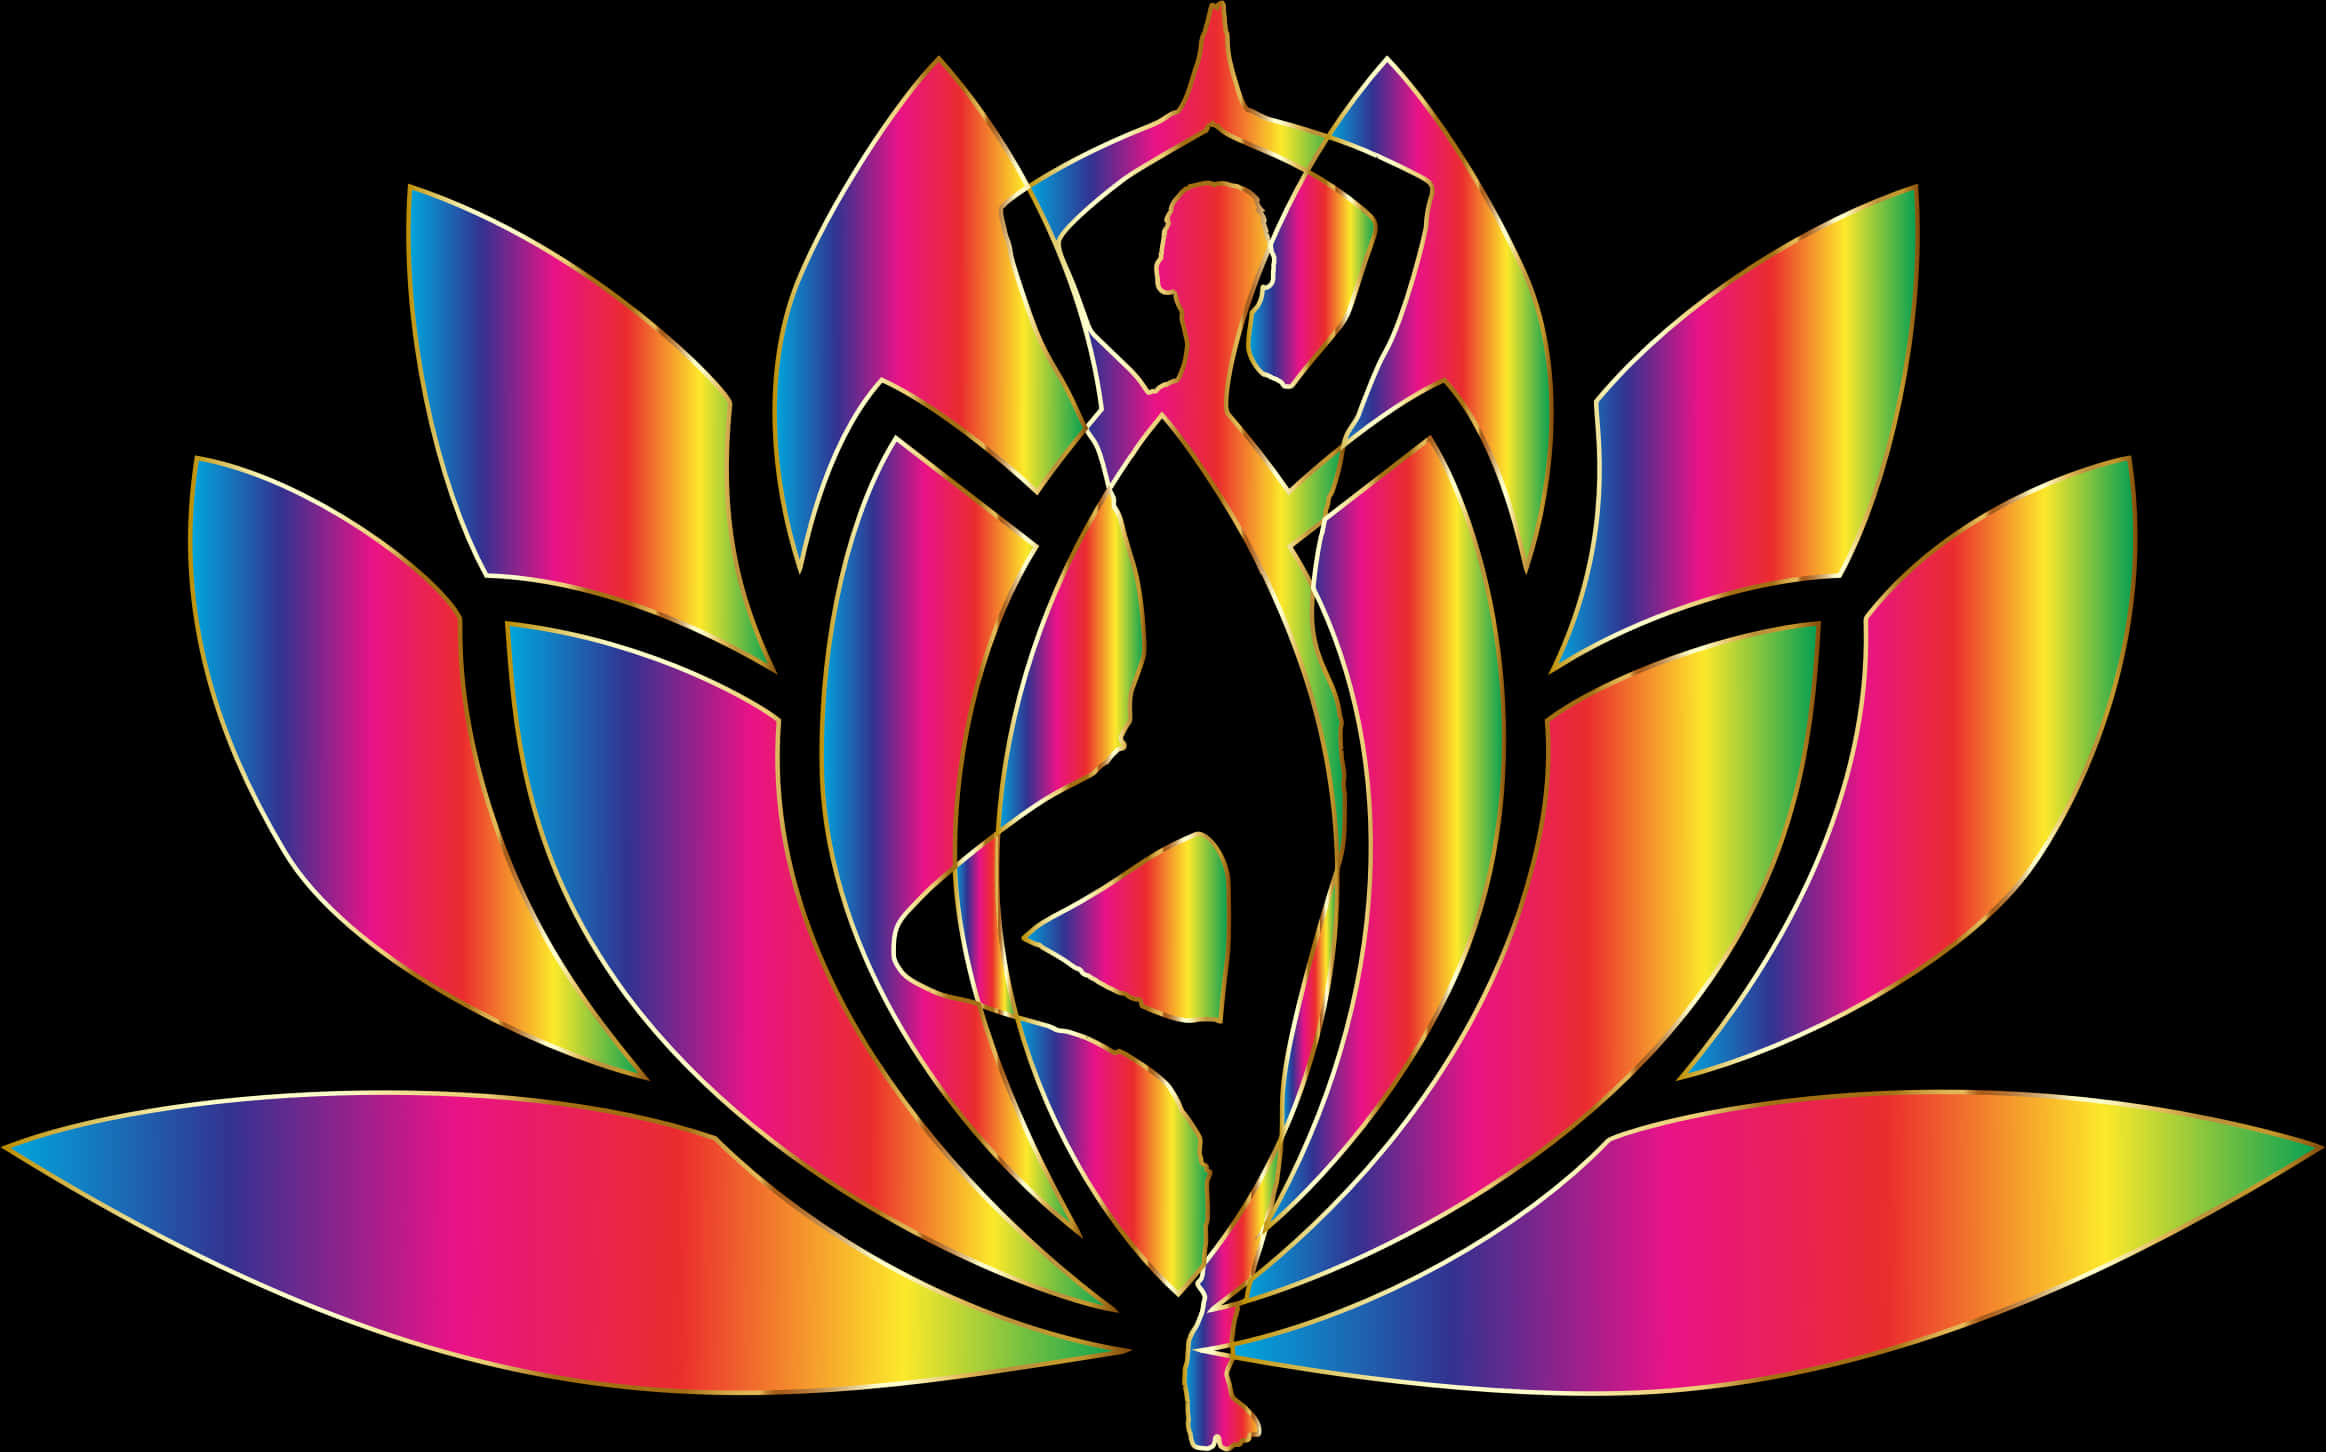 Download Colorful Lotus Yoga Pose Illustration | Wallpapers.com